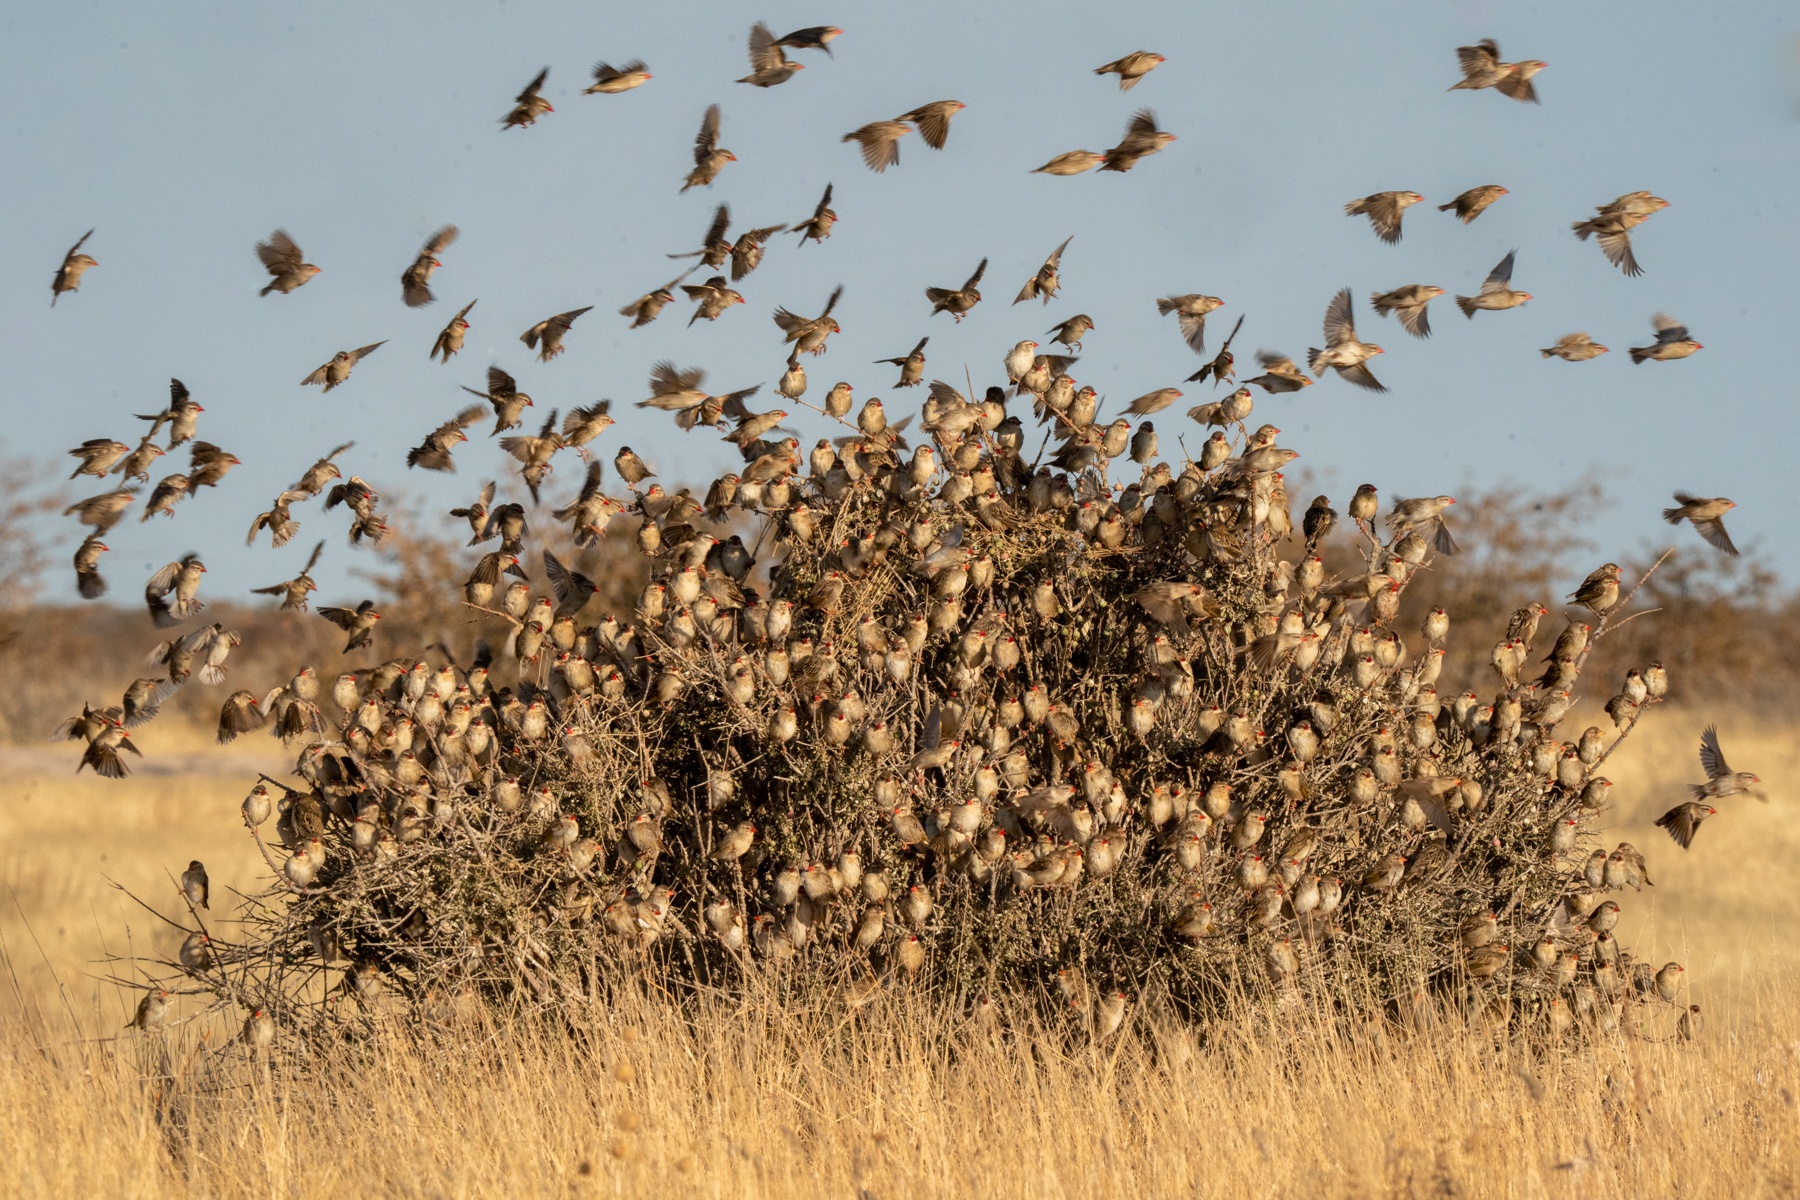 A flock of Red-billed Queleas take off from their bushy perch in Etosha